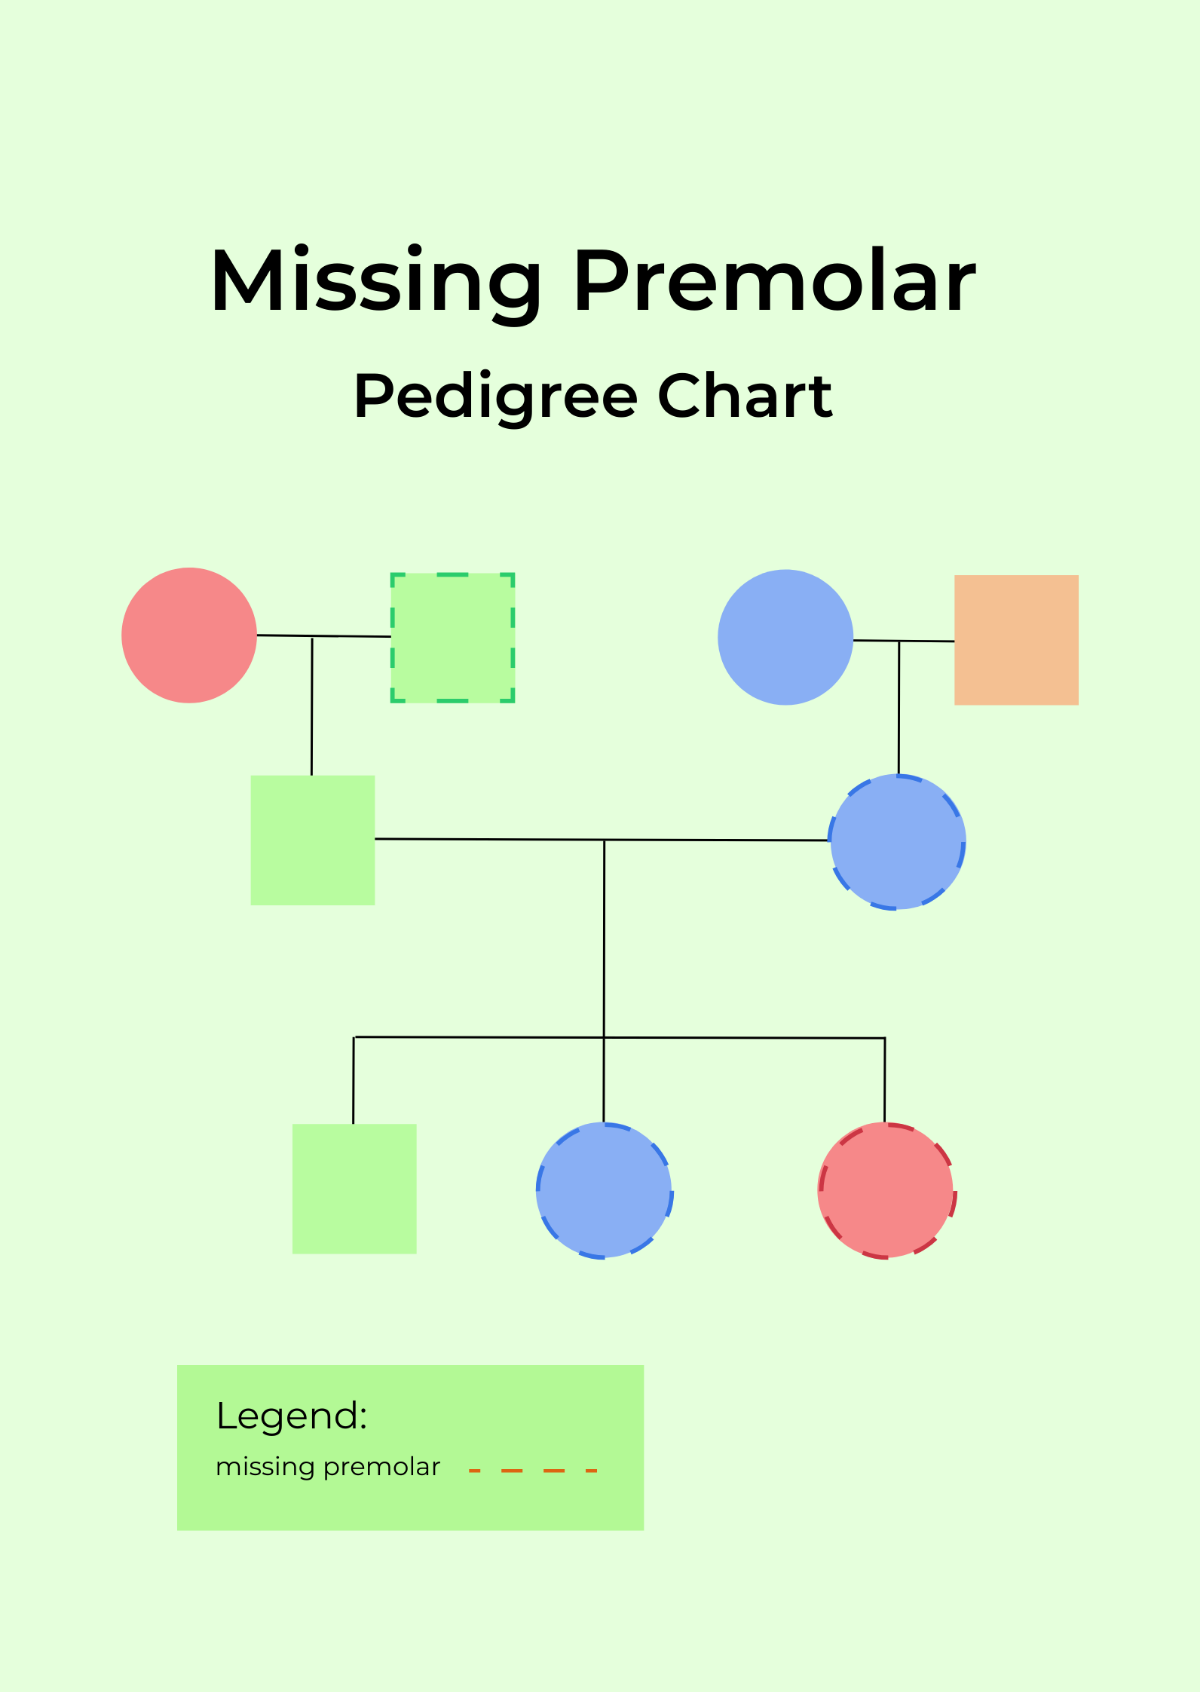 Missing Premolar Pedigree Chart Template